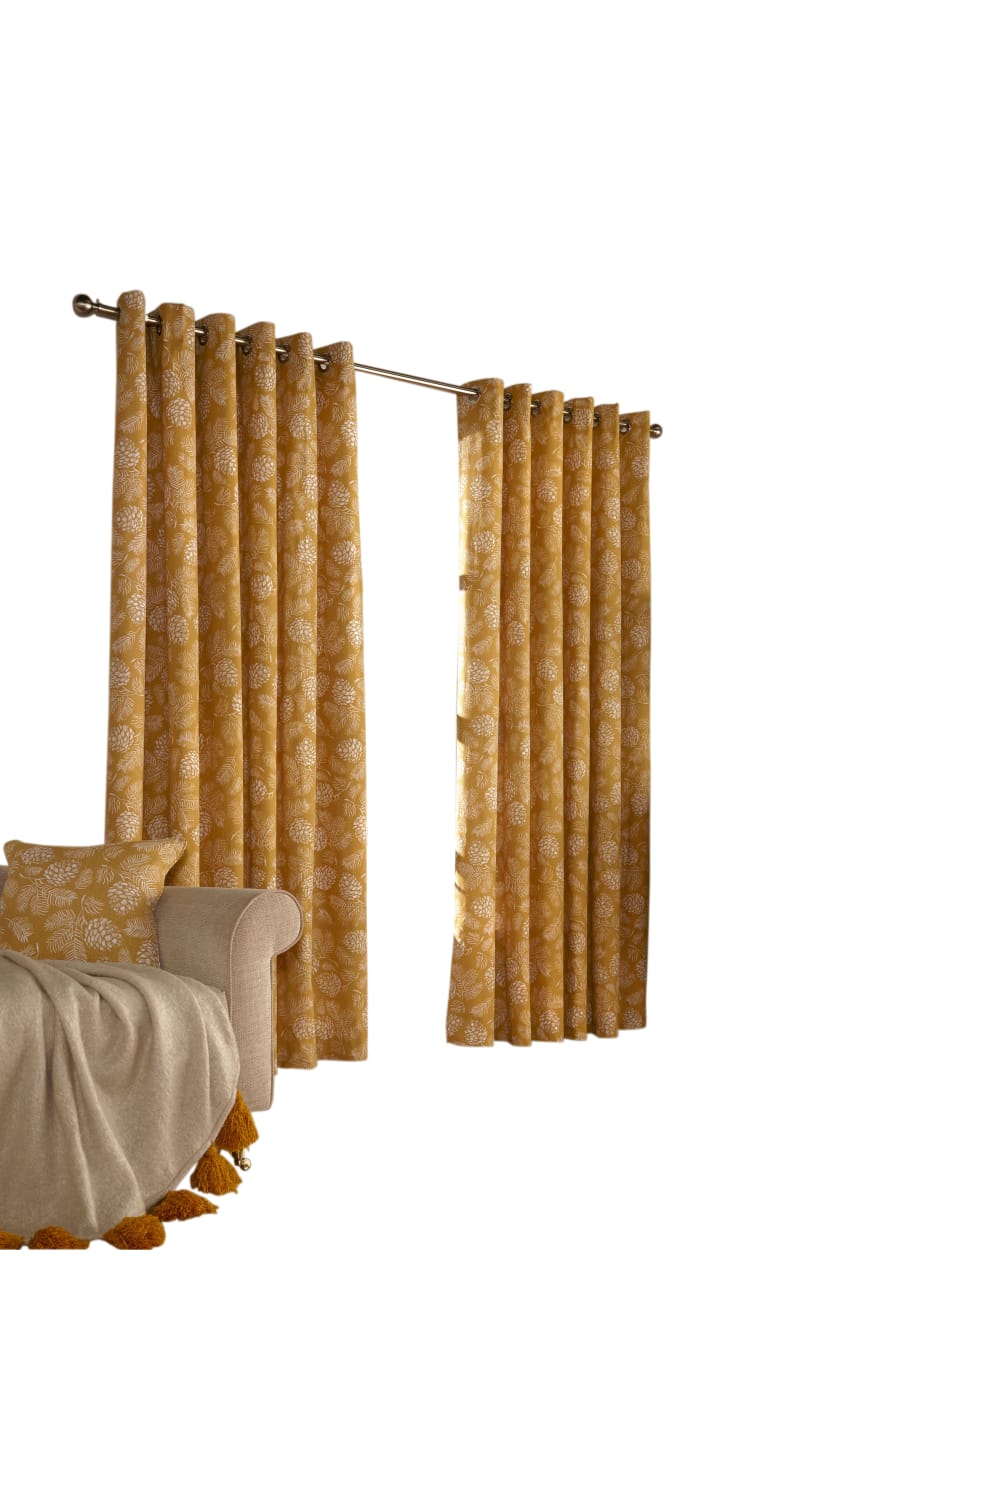 Furn Irwin Woodland Design Ringtop Eyelet Curtains (Pair) (Mustard) (46x72in)